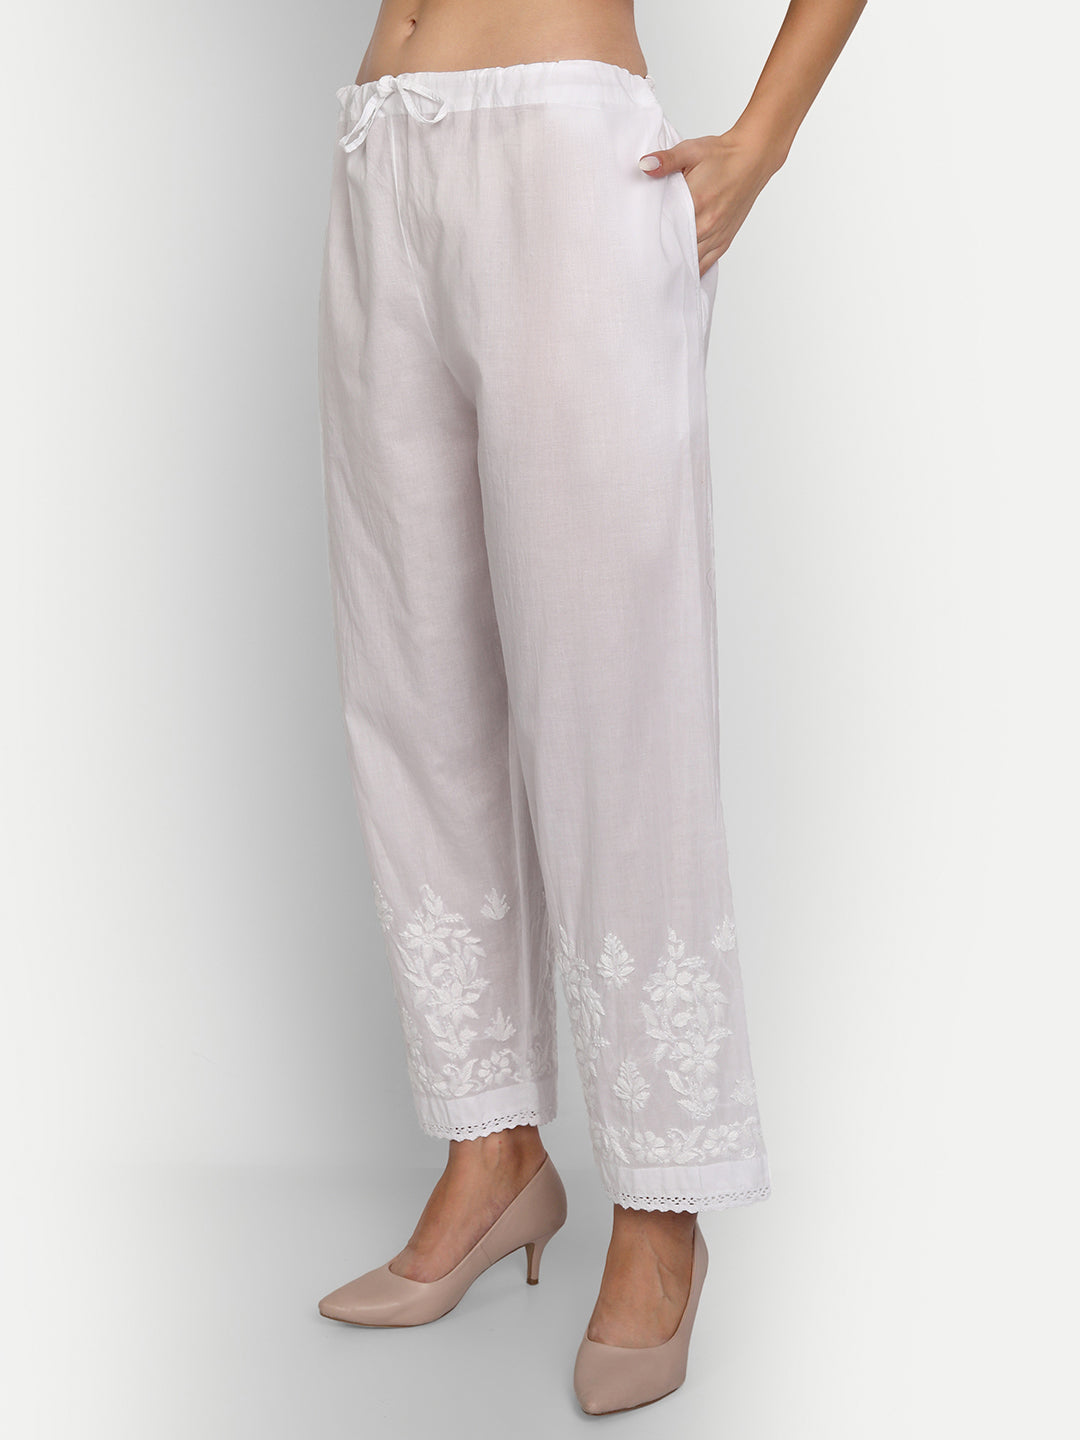 Ethnic Girls Full Chikankari Free Size White Cotton Palazzo Pants | eBay